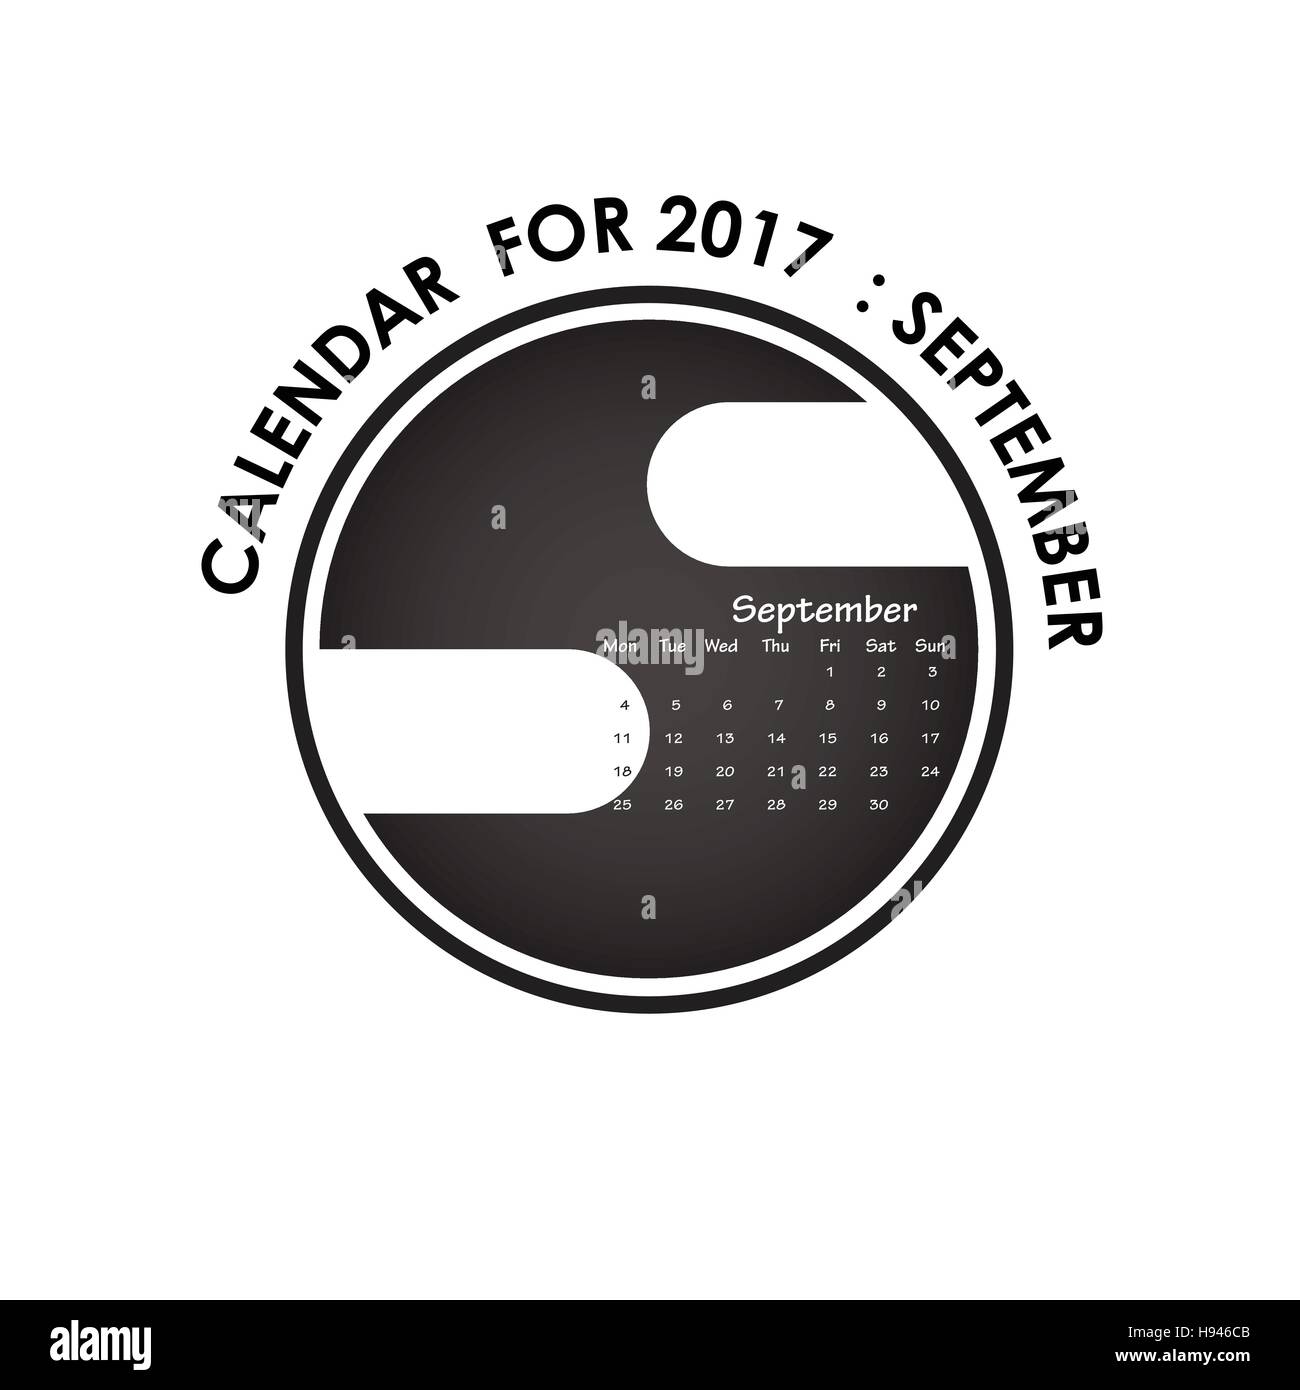 2017 calendar vector design stationery template.Calendar for september 2017.Vector illustration. Stock Vector